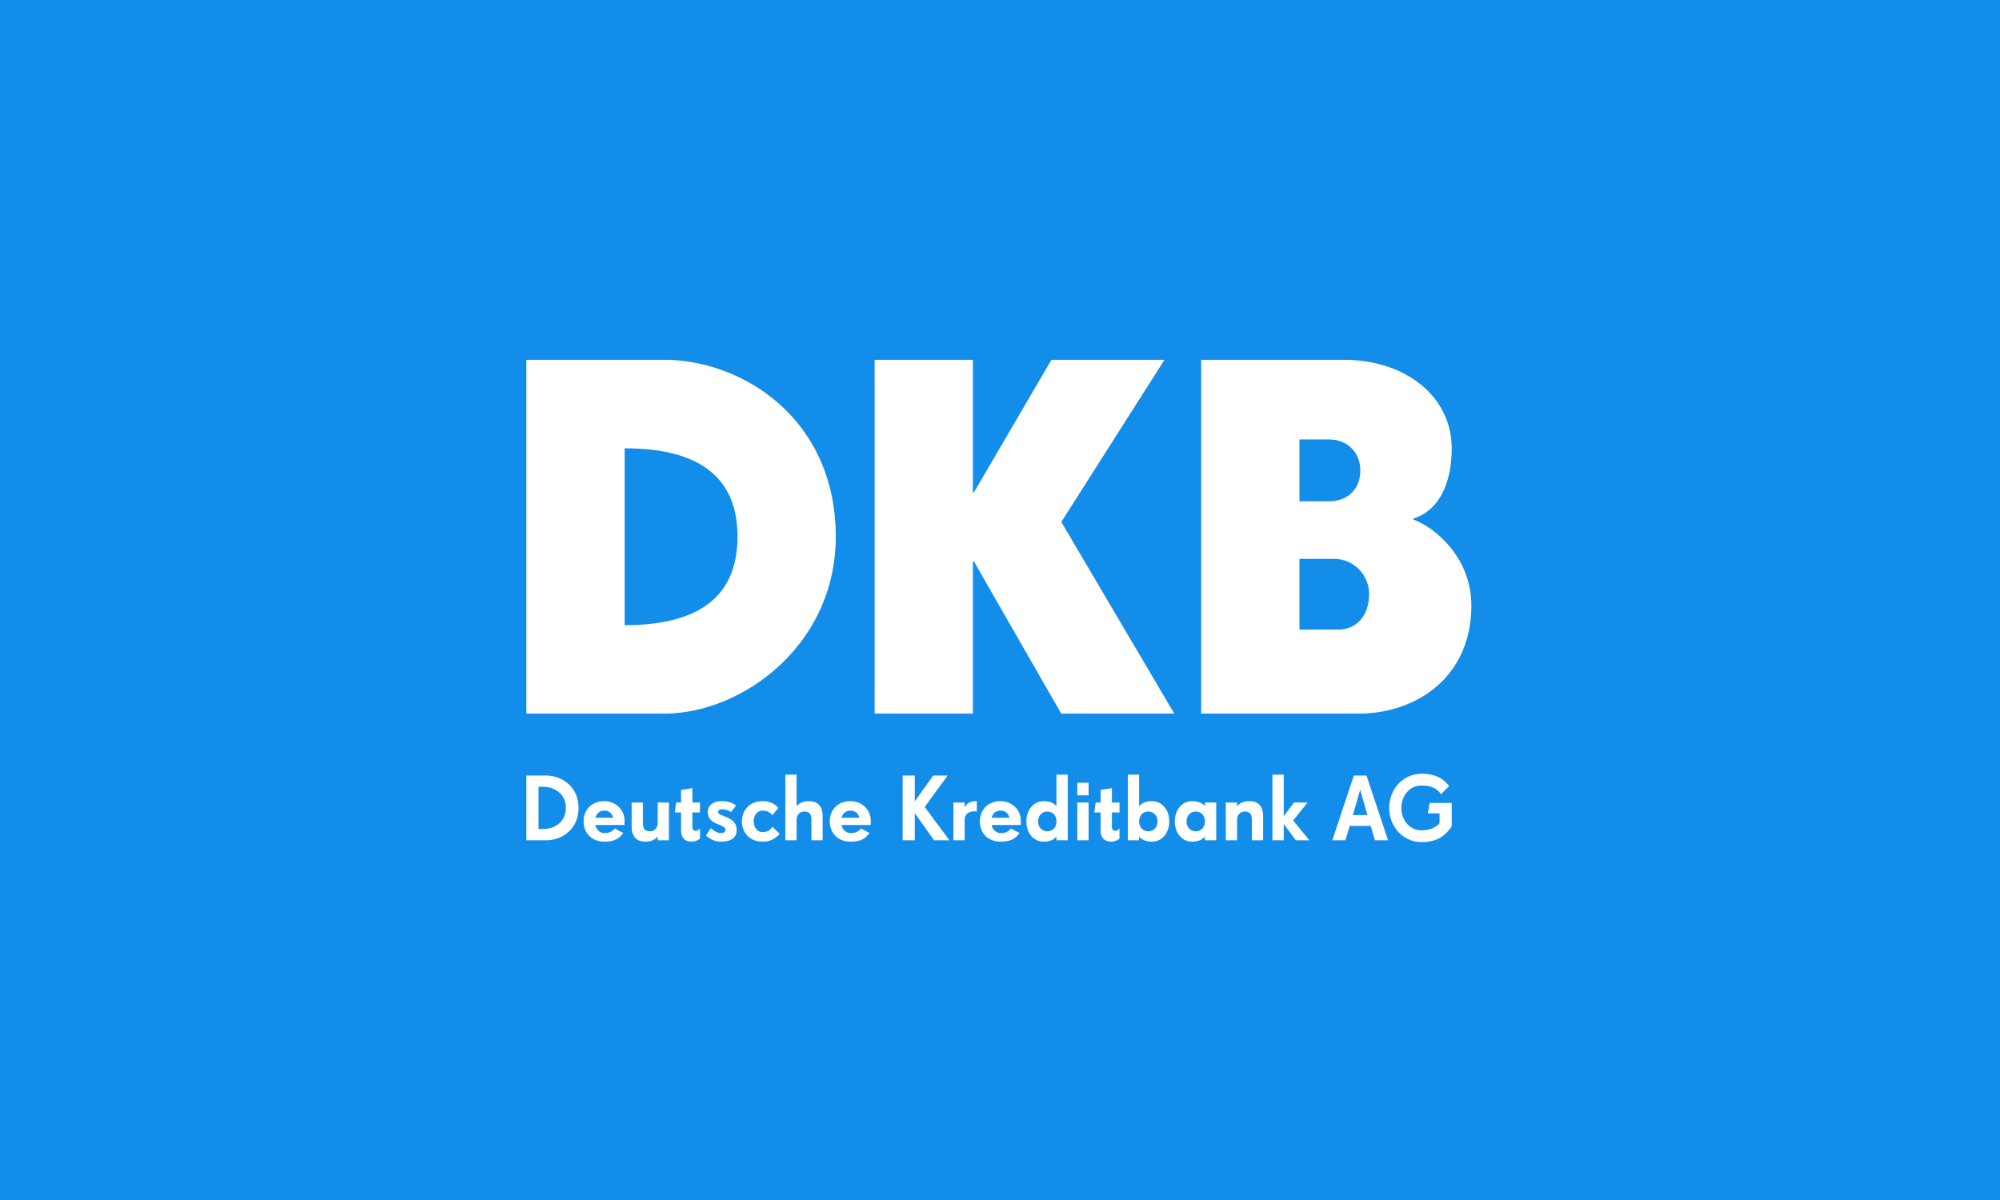 DKB Deutsche Kreditbank